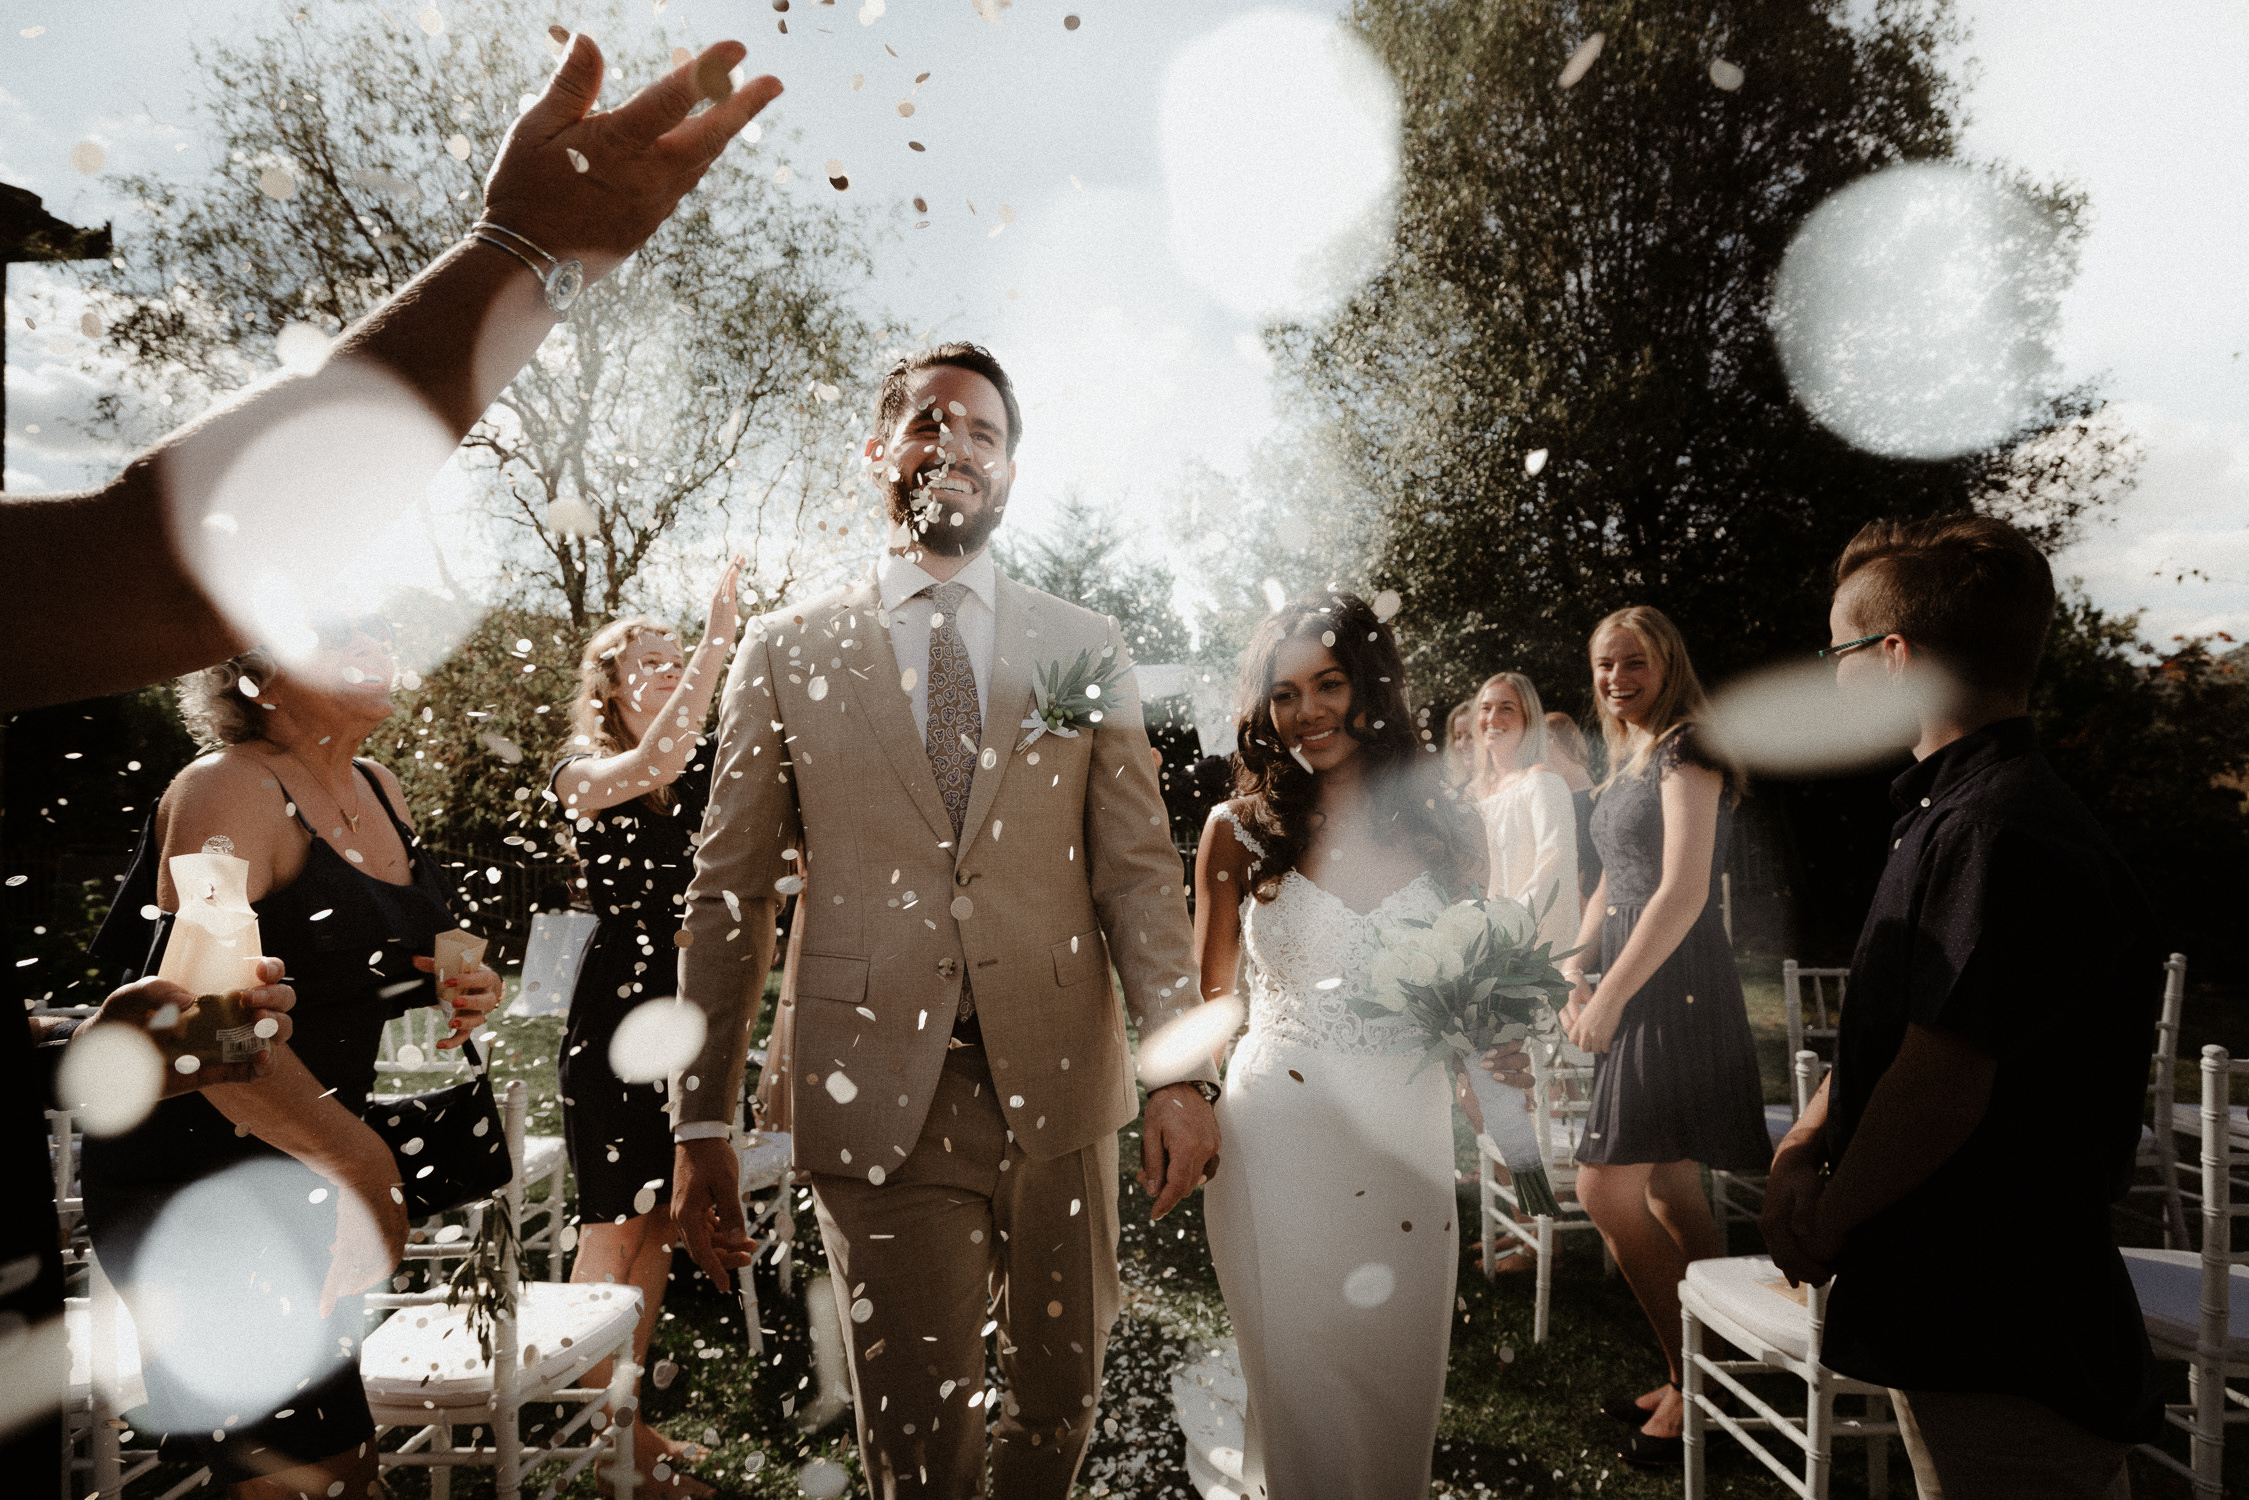 bruidspaar met confetti het beste bruidsfotograaf uit amsterdam en utrecht